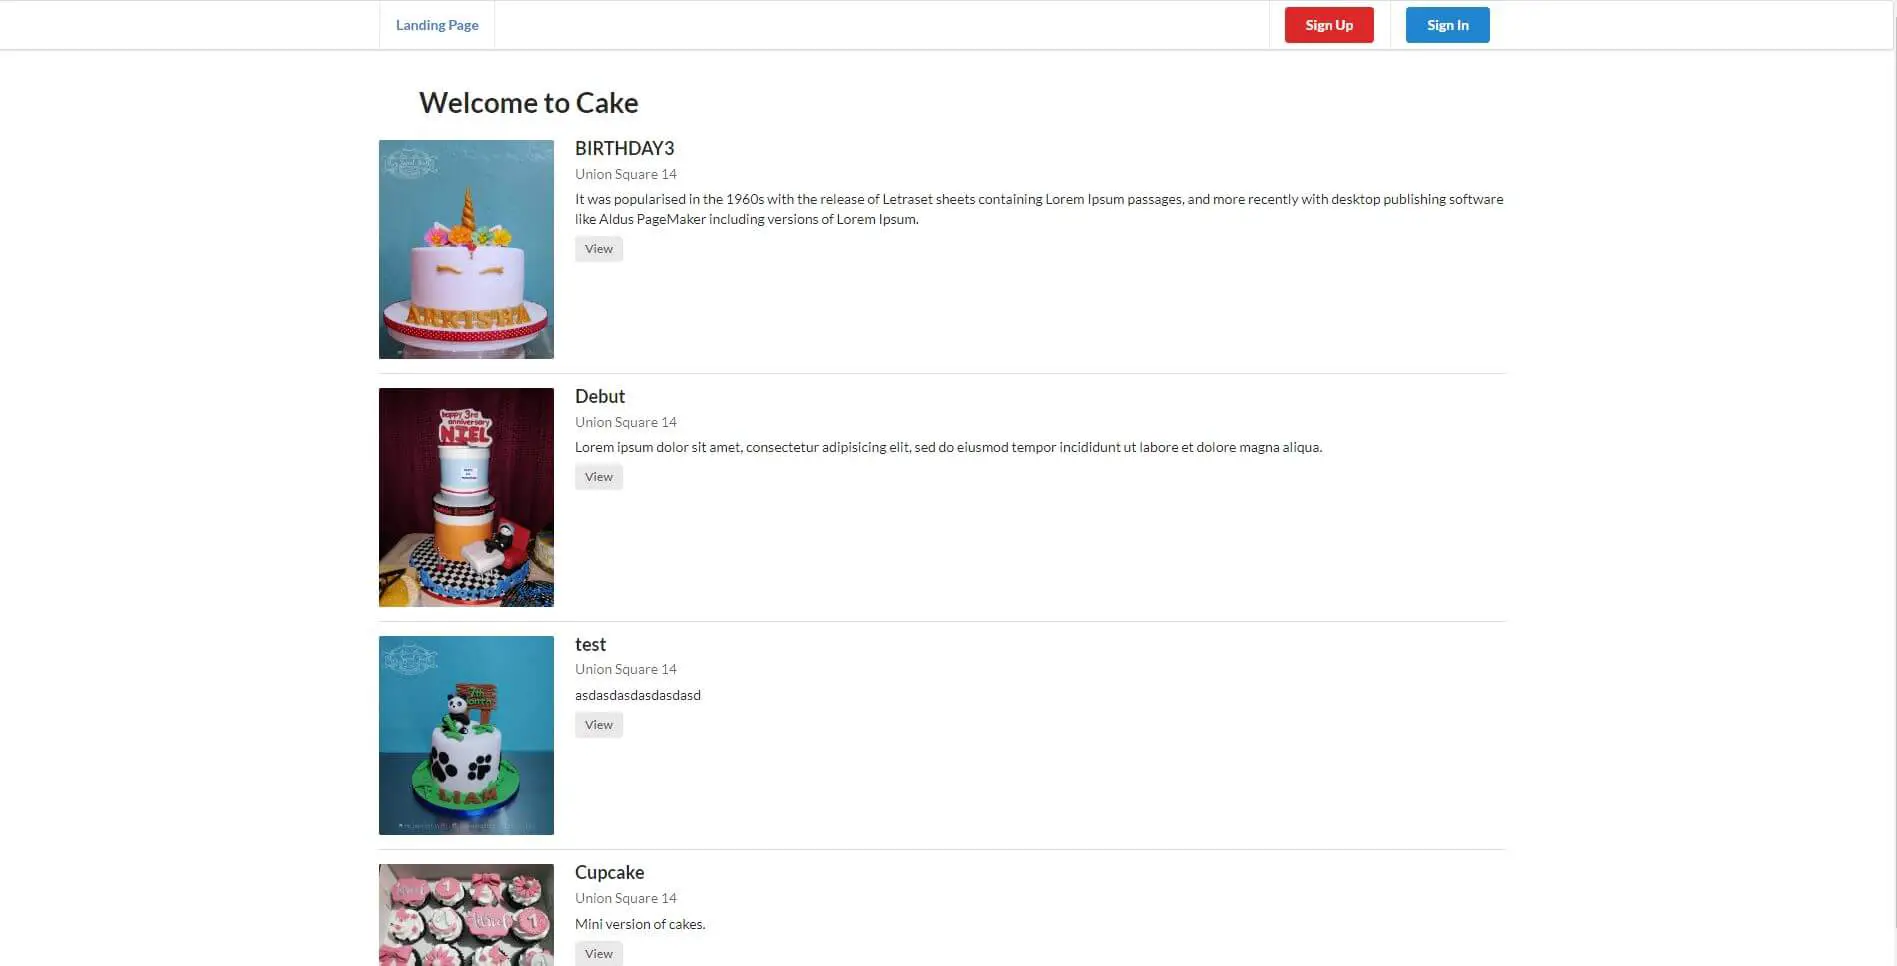 Cake Ordering System - Landing Page